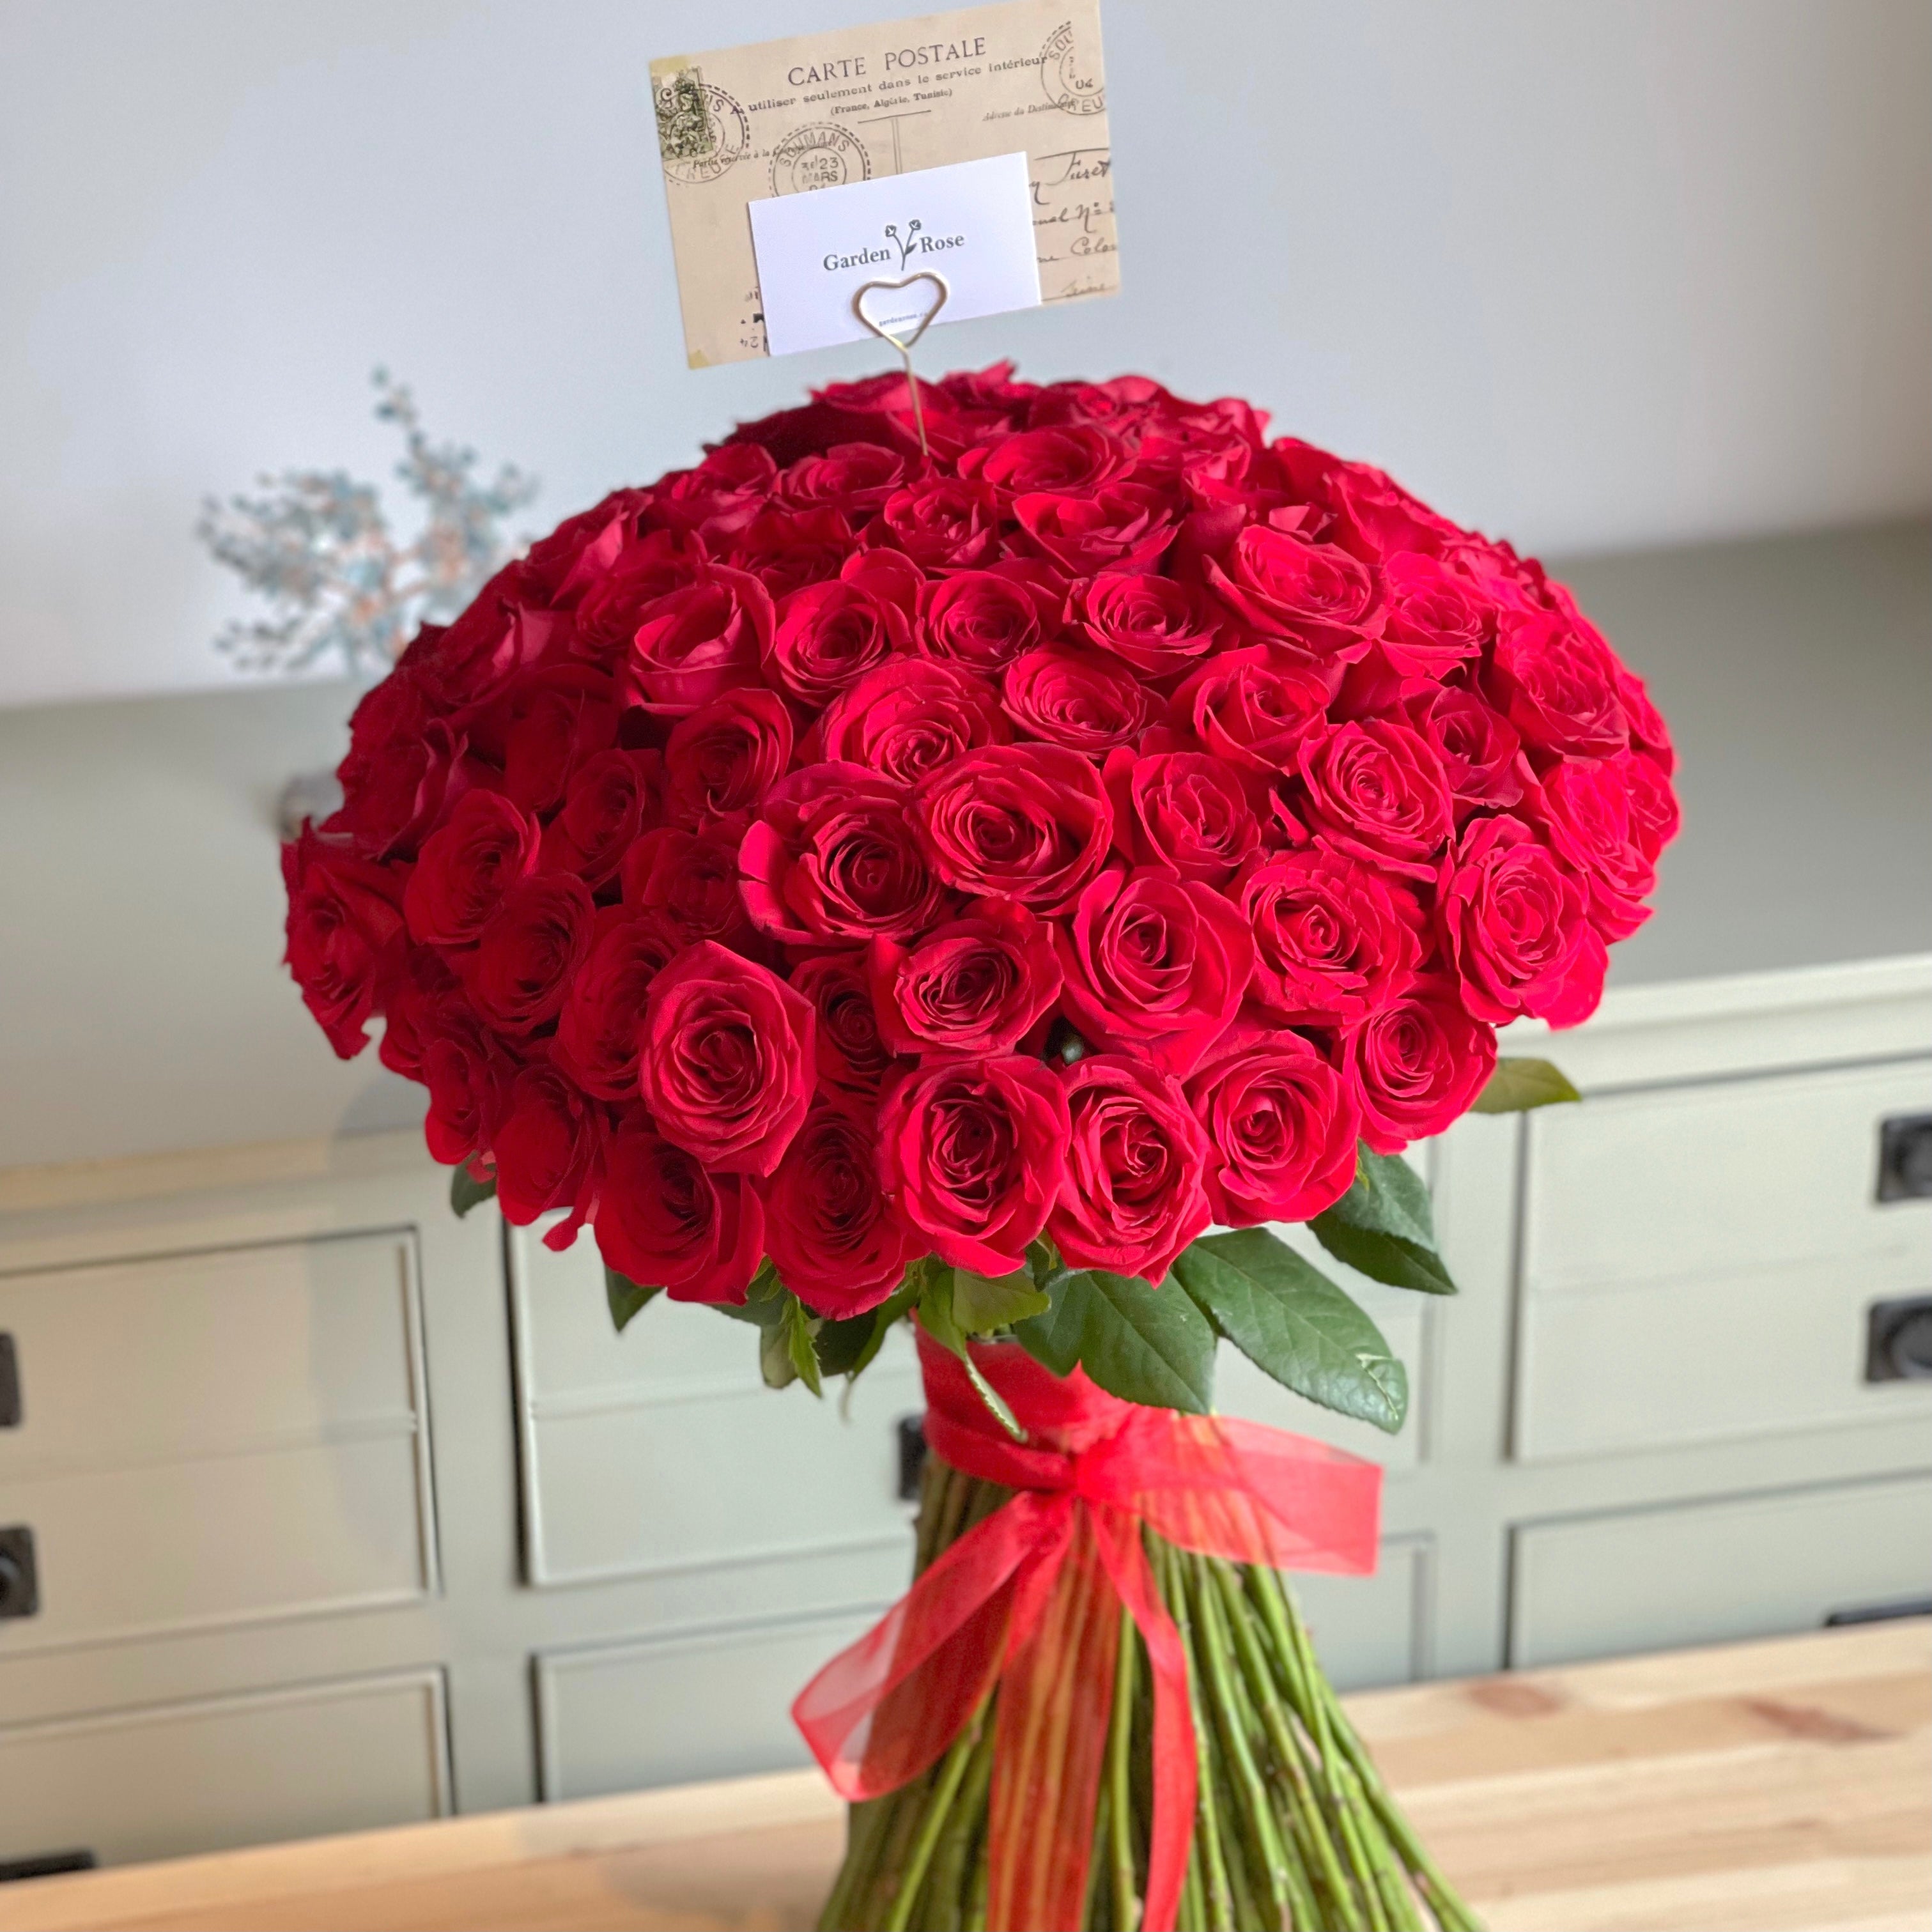 100 Roses - Garden Rose Flowers - LA & OC Same Day Flower Delivery